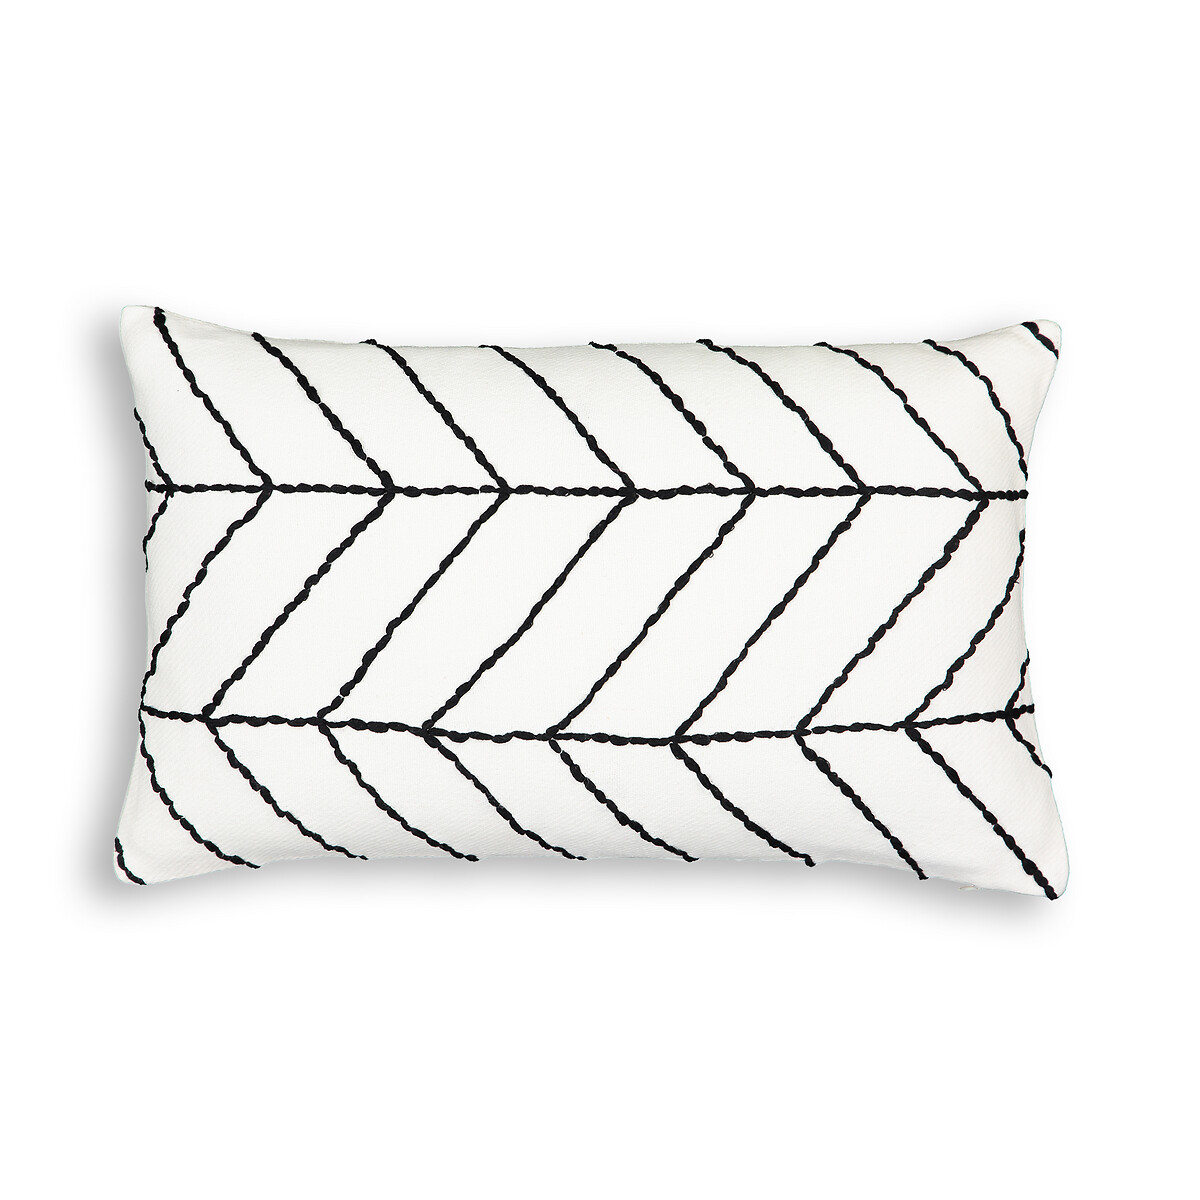 Чехол LaRedoute На подушку из 100 хлопка с вышивкой Travi 50 x 30 см белый, размер 50 x 30 см